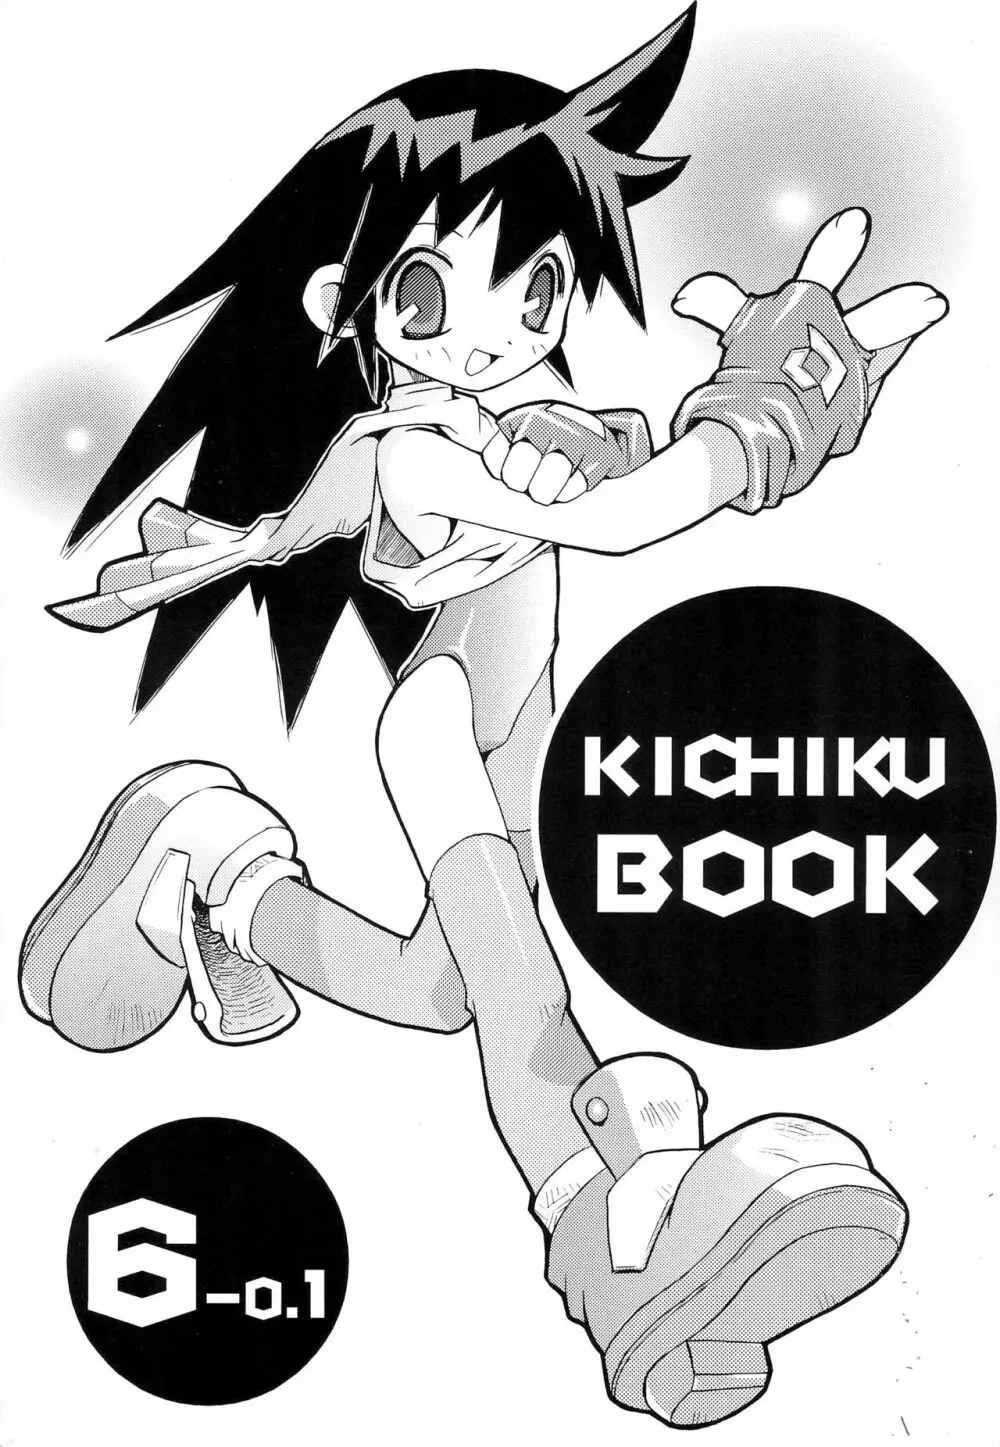 KICHIKU BOOK 6-0.1 - page1